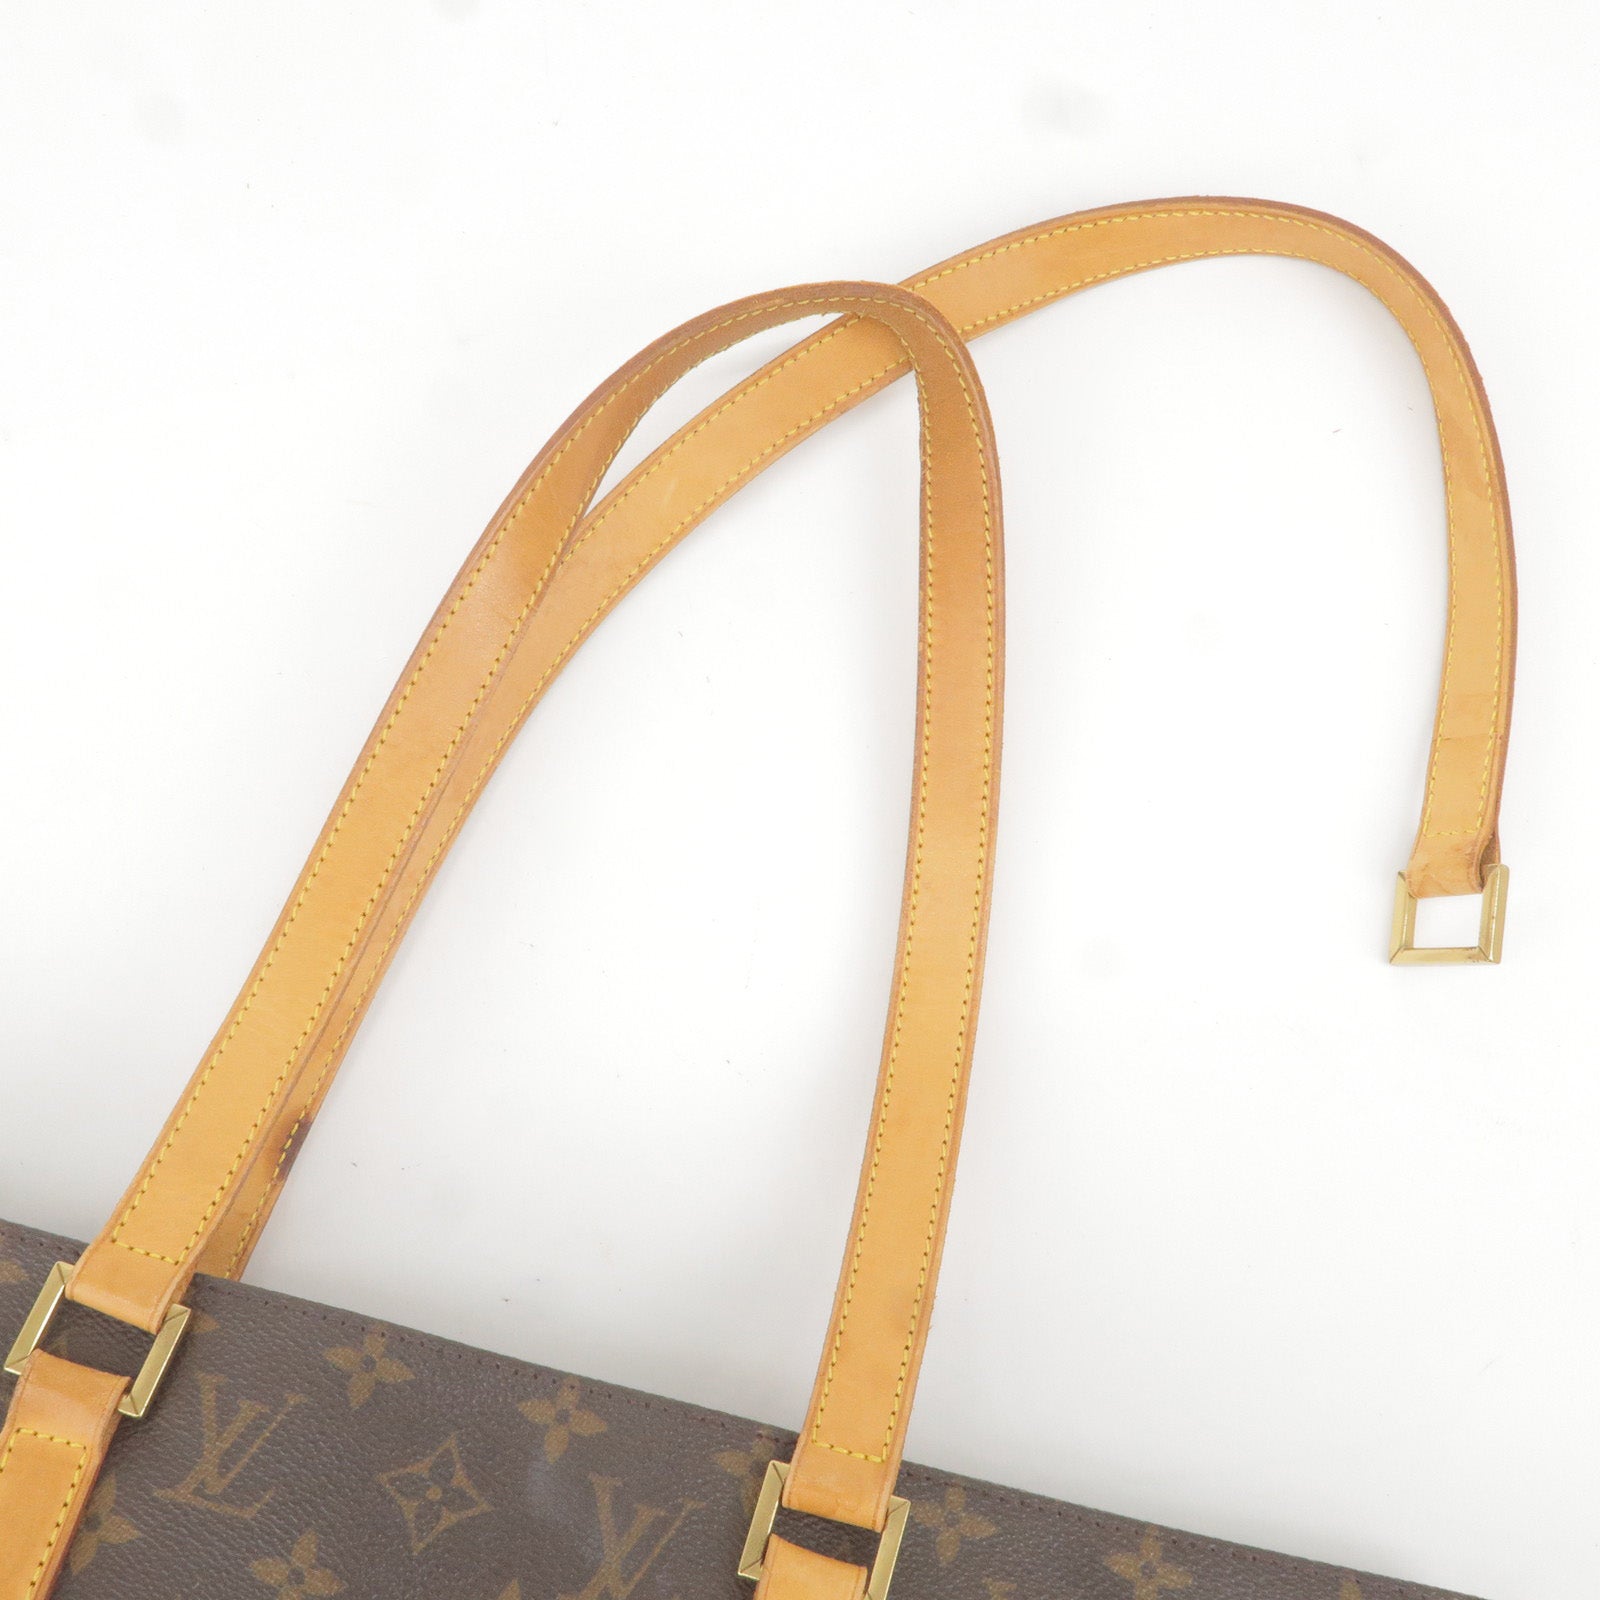 Pre love Louis Vuitton Damier Ebene Nolita Satchel Bag, Luxury